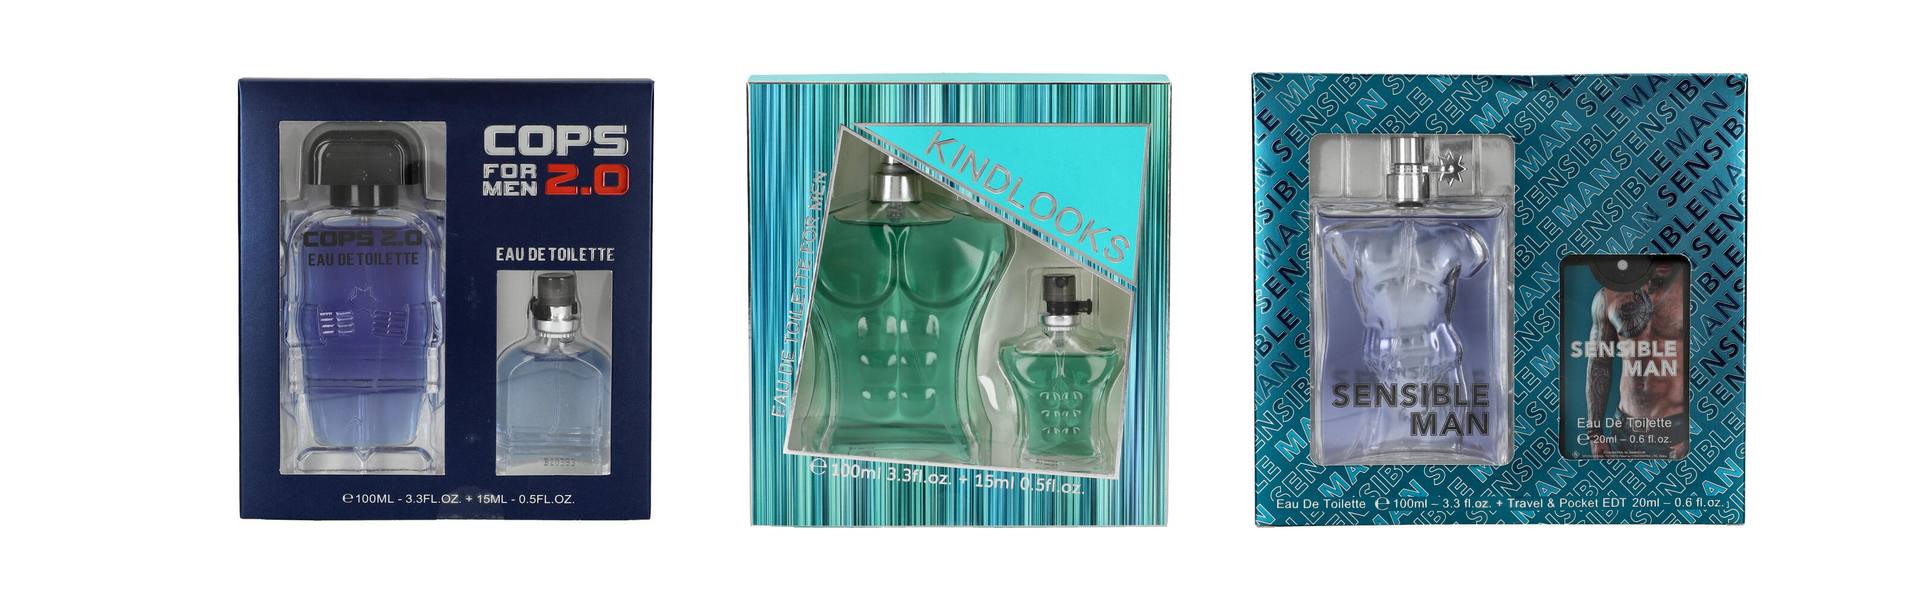 513816429/blog356568men's perfume box.jpg - ModaServerPro